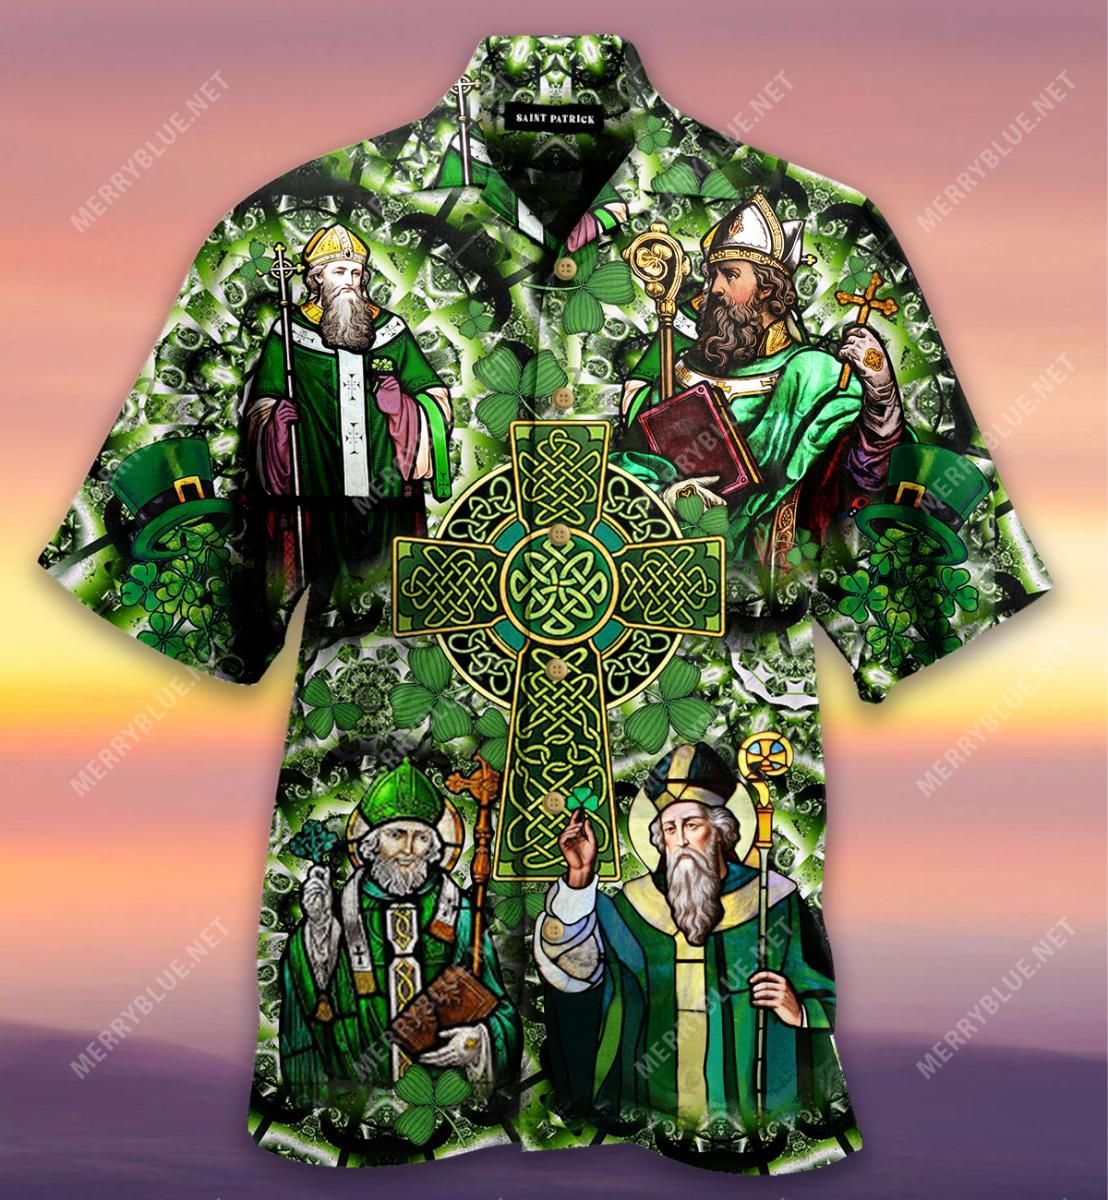 Life Is Better On Papa’S Tractor Aloha Hawaiian Shirt Colorful Short Sleeve Summer Beach Casual Shirt For Men And Women